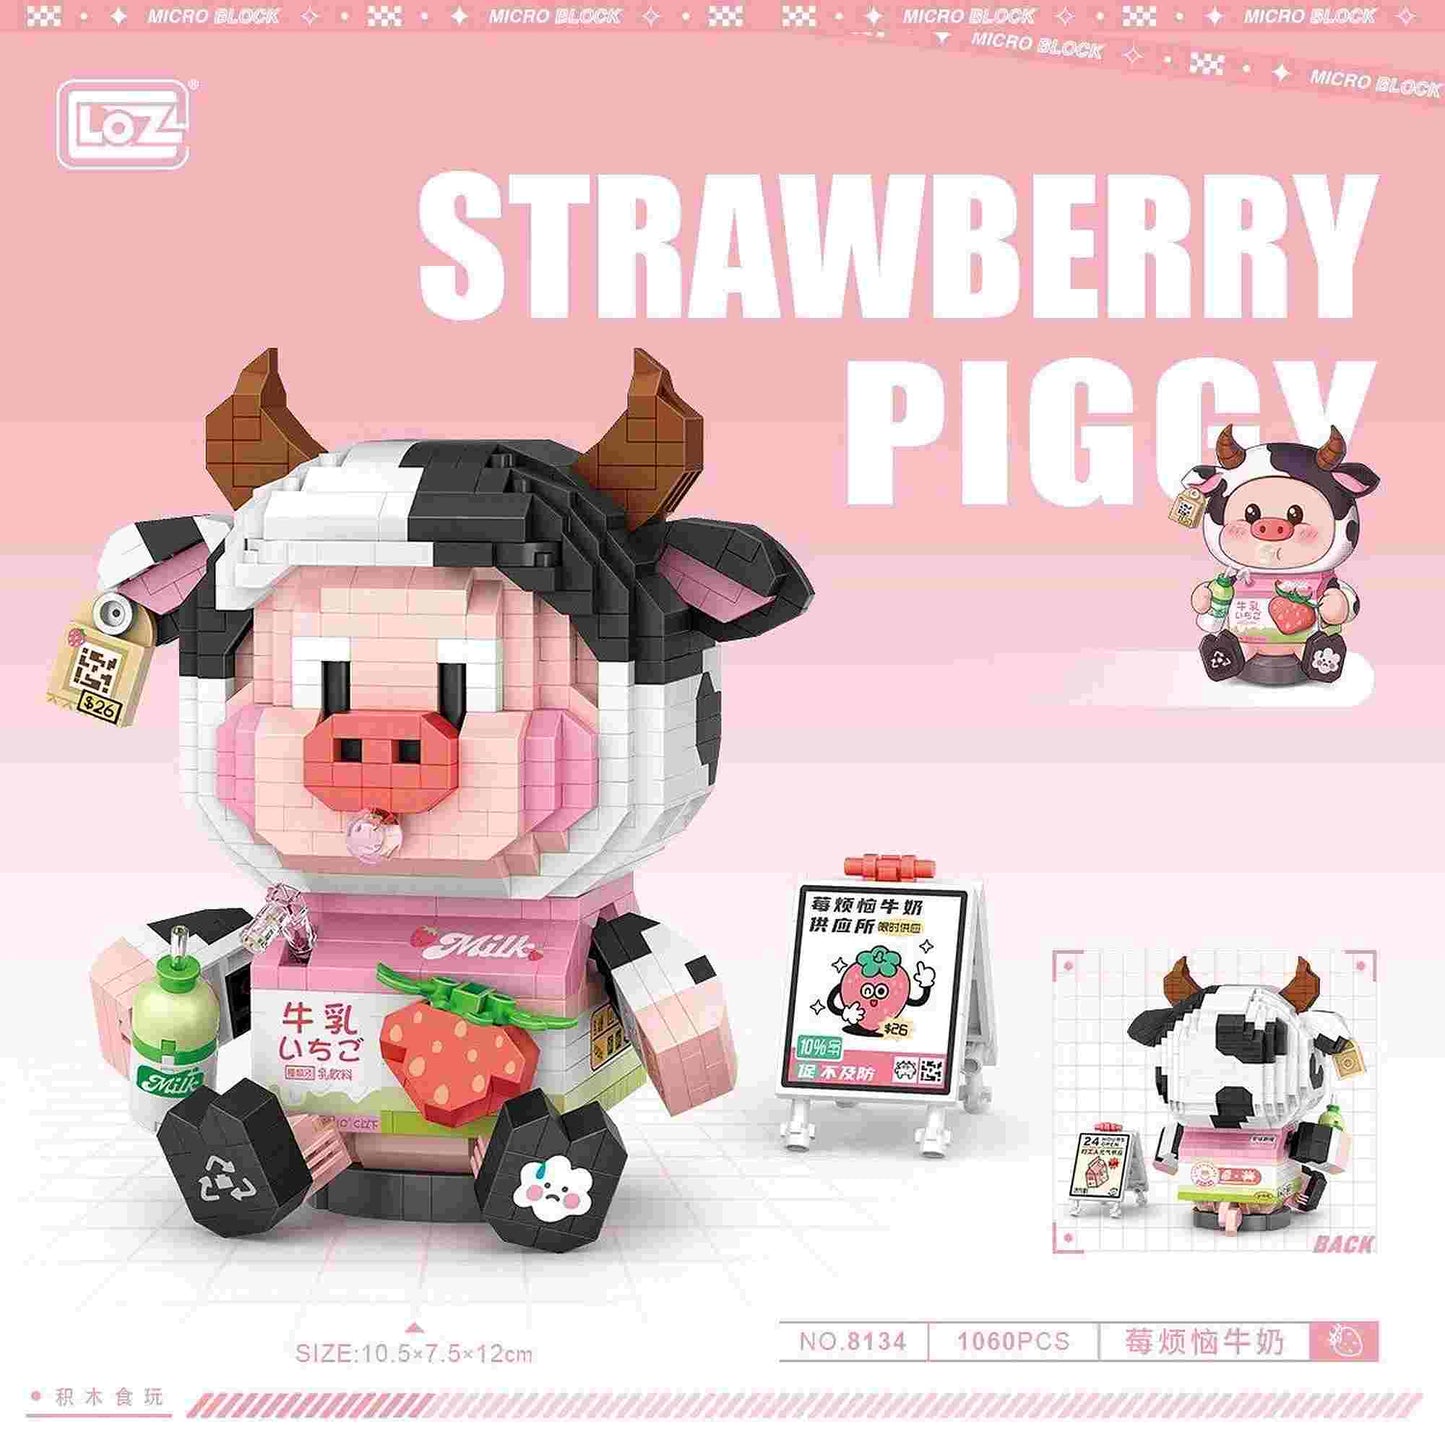 LOZ Strawberry Piggy (8134) Mini Diamond Blocks Bricks Educational Hobbies Toy